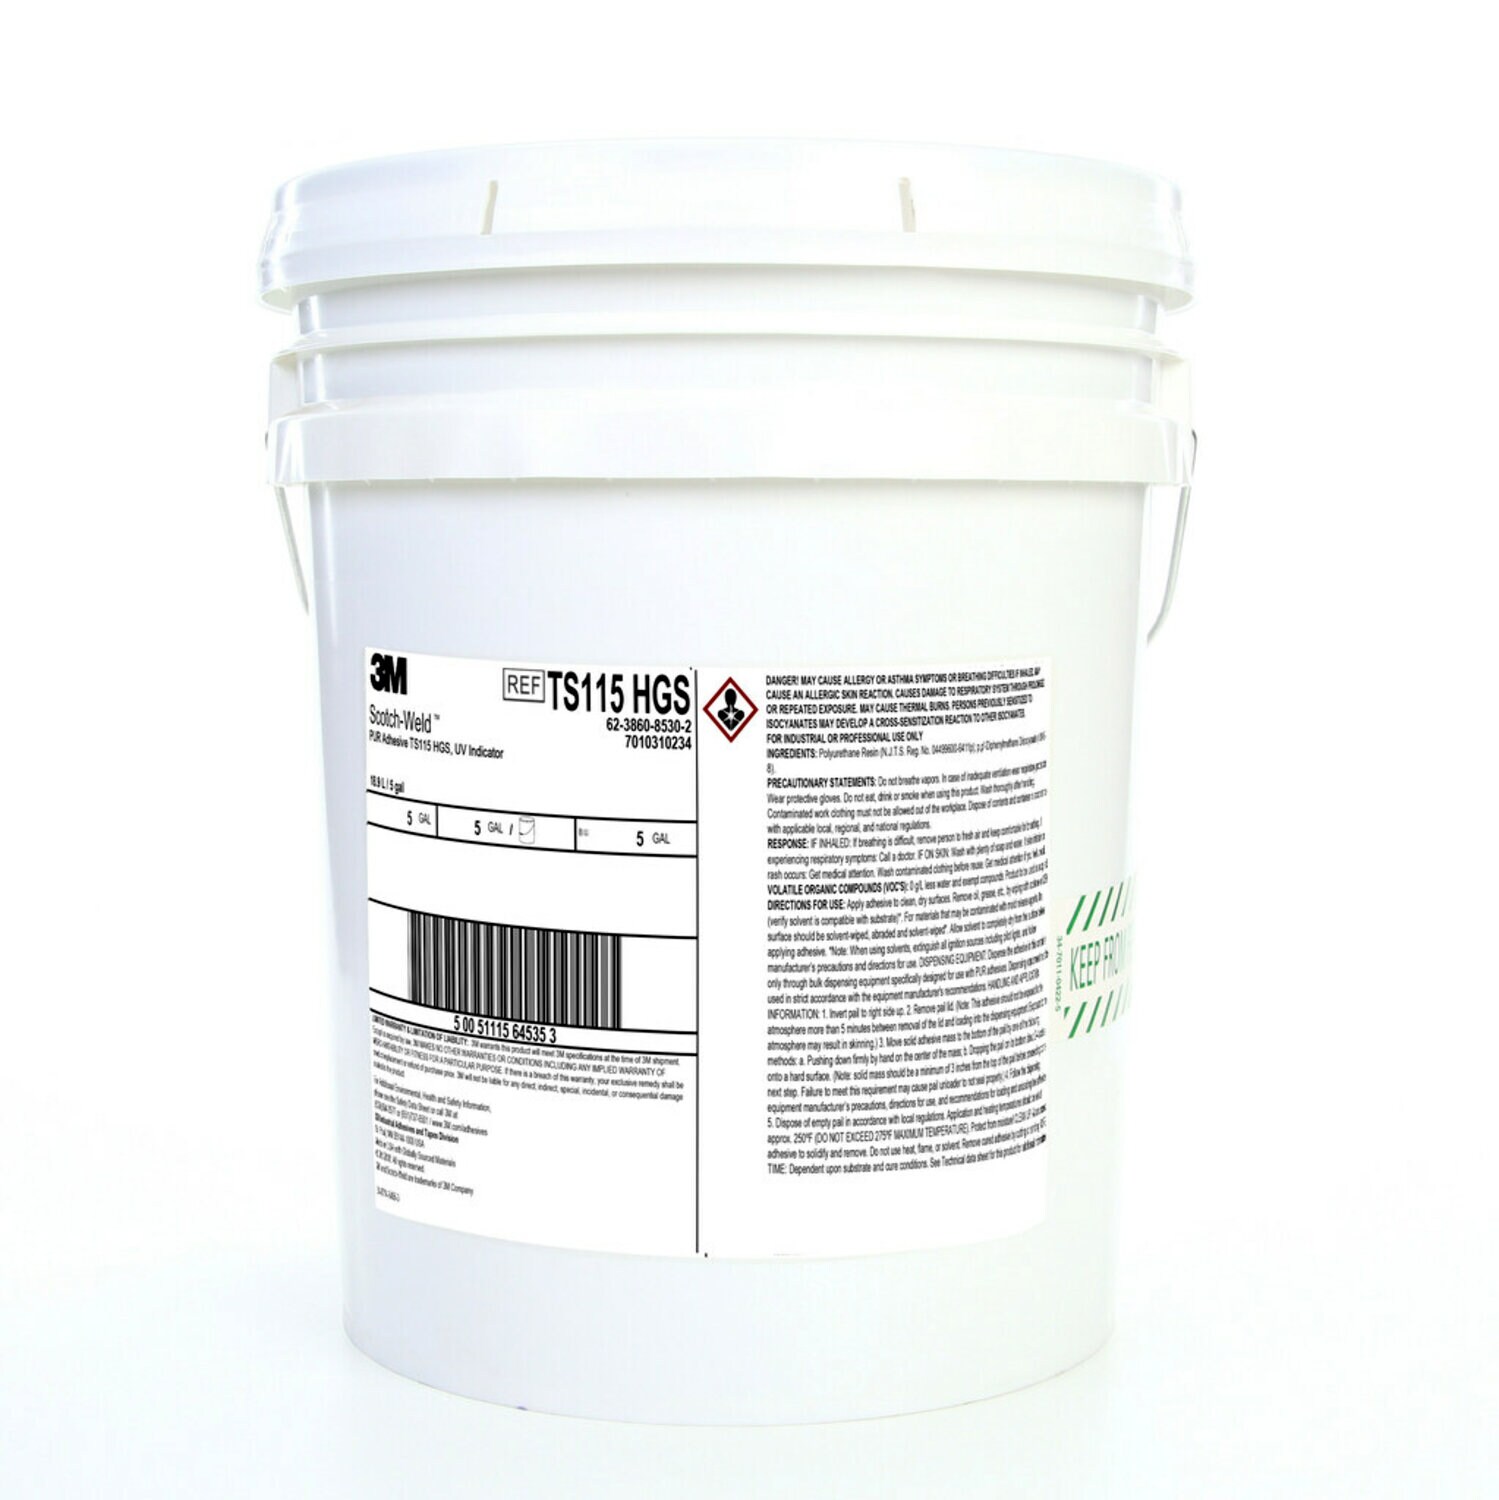 7010310234 - 3M Scotch-Weld PUR Adhesive TS115 HGS, UV Indicator, Off-White, 5
Gallon (36 lb), Drum